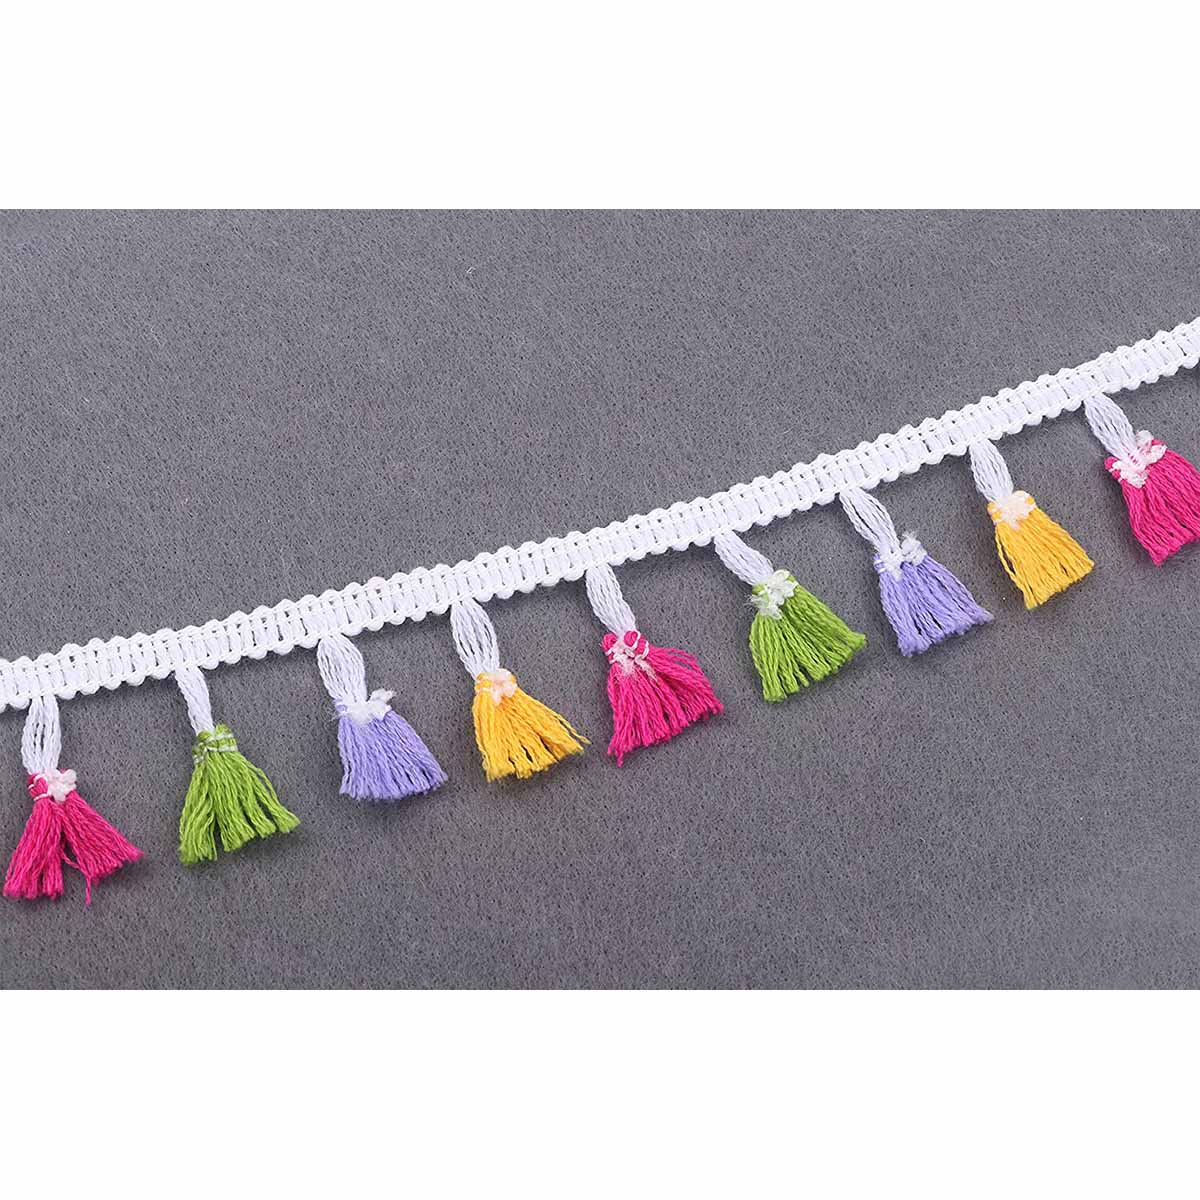 6 Yards Tassel Trim Cotton Fabric Ribbon Fringe-Colorful